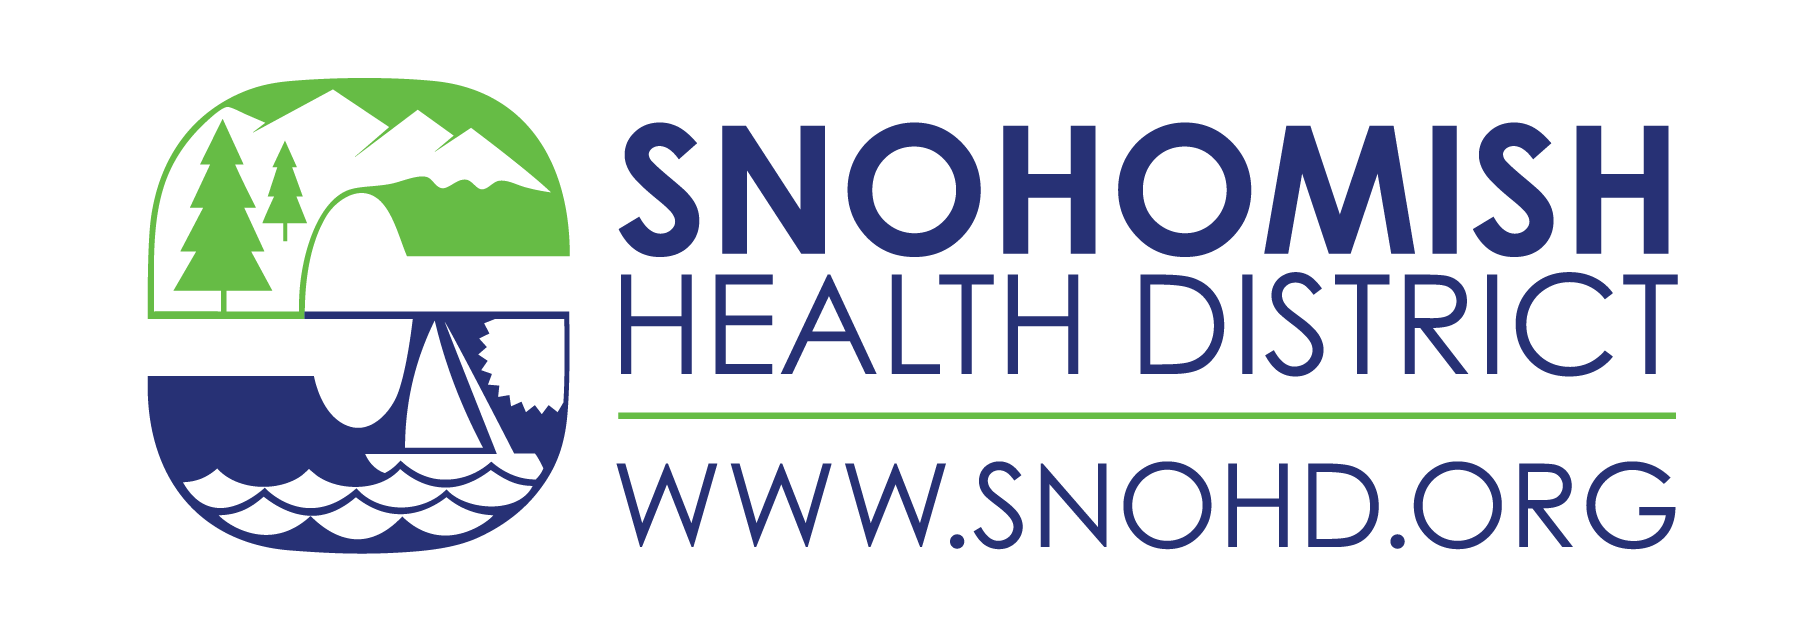 Snohomish Health District Testing Site - Sultan Elementary School Logo